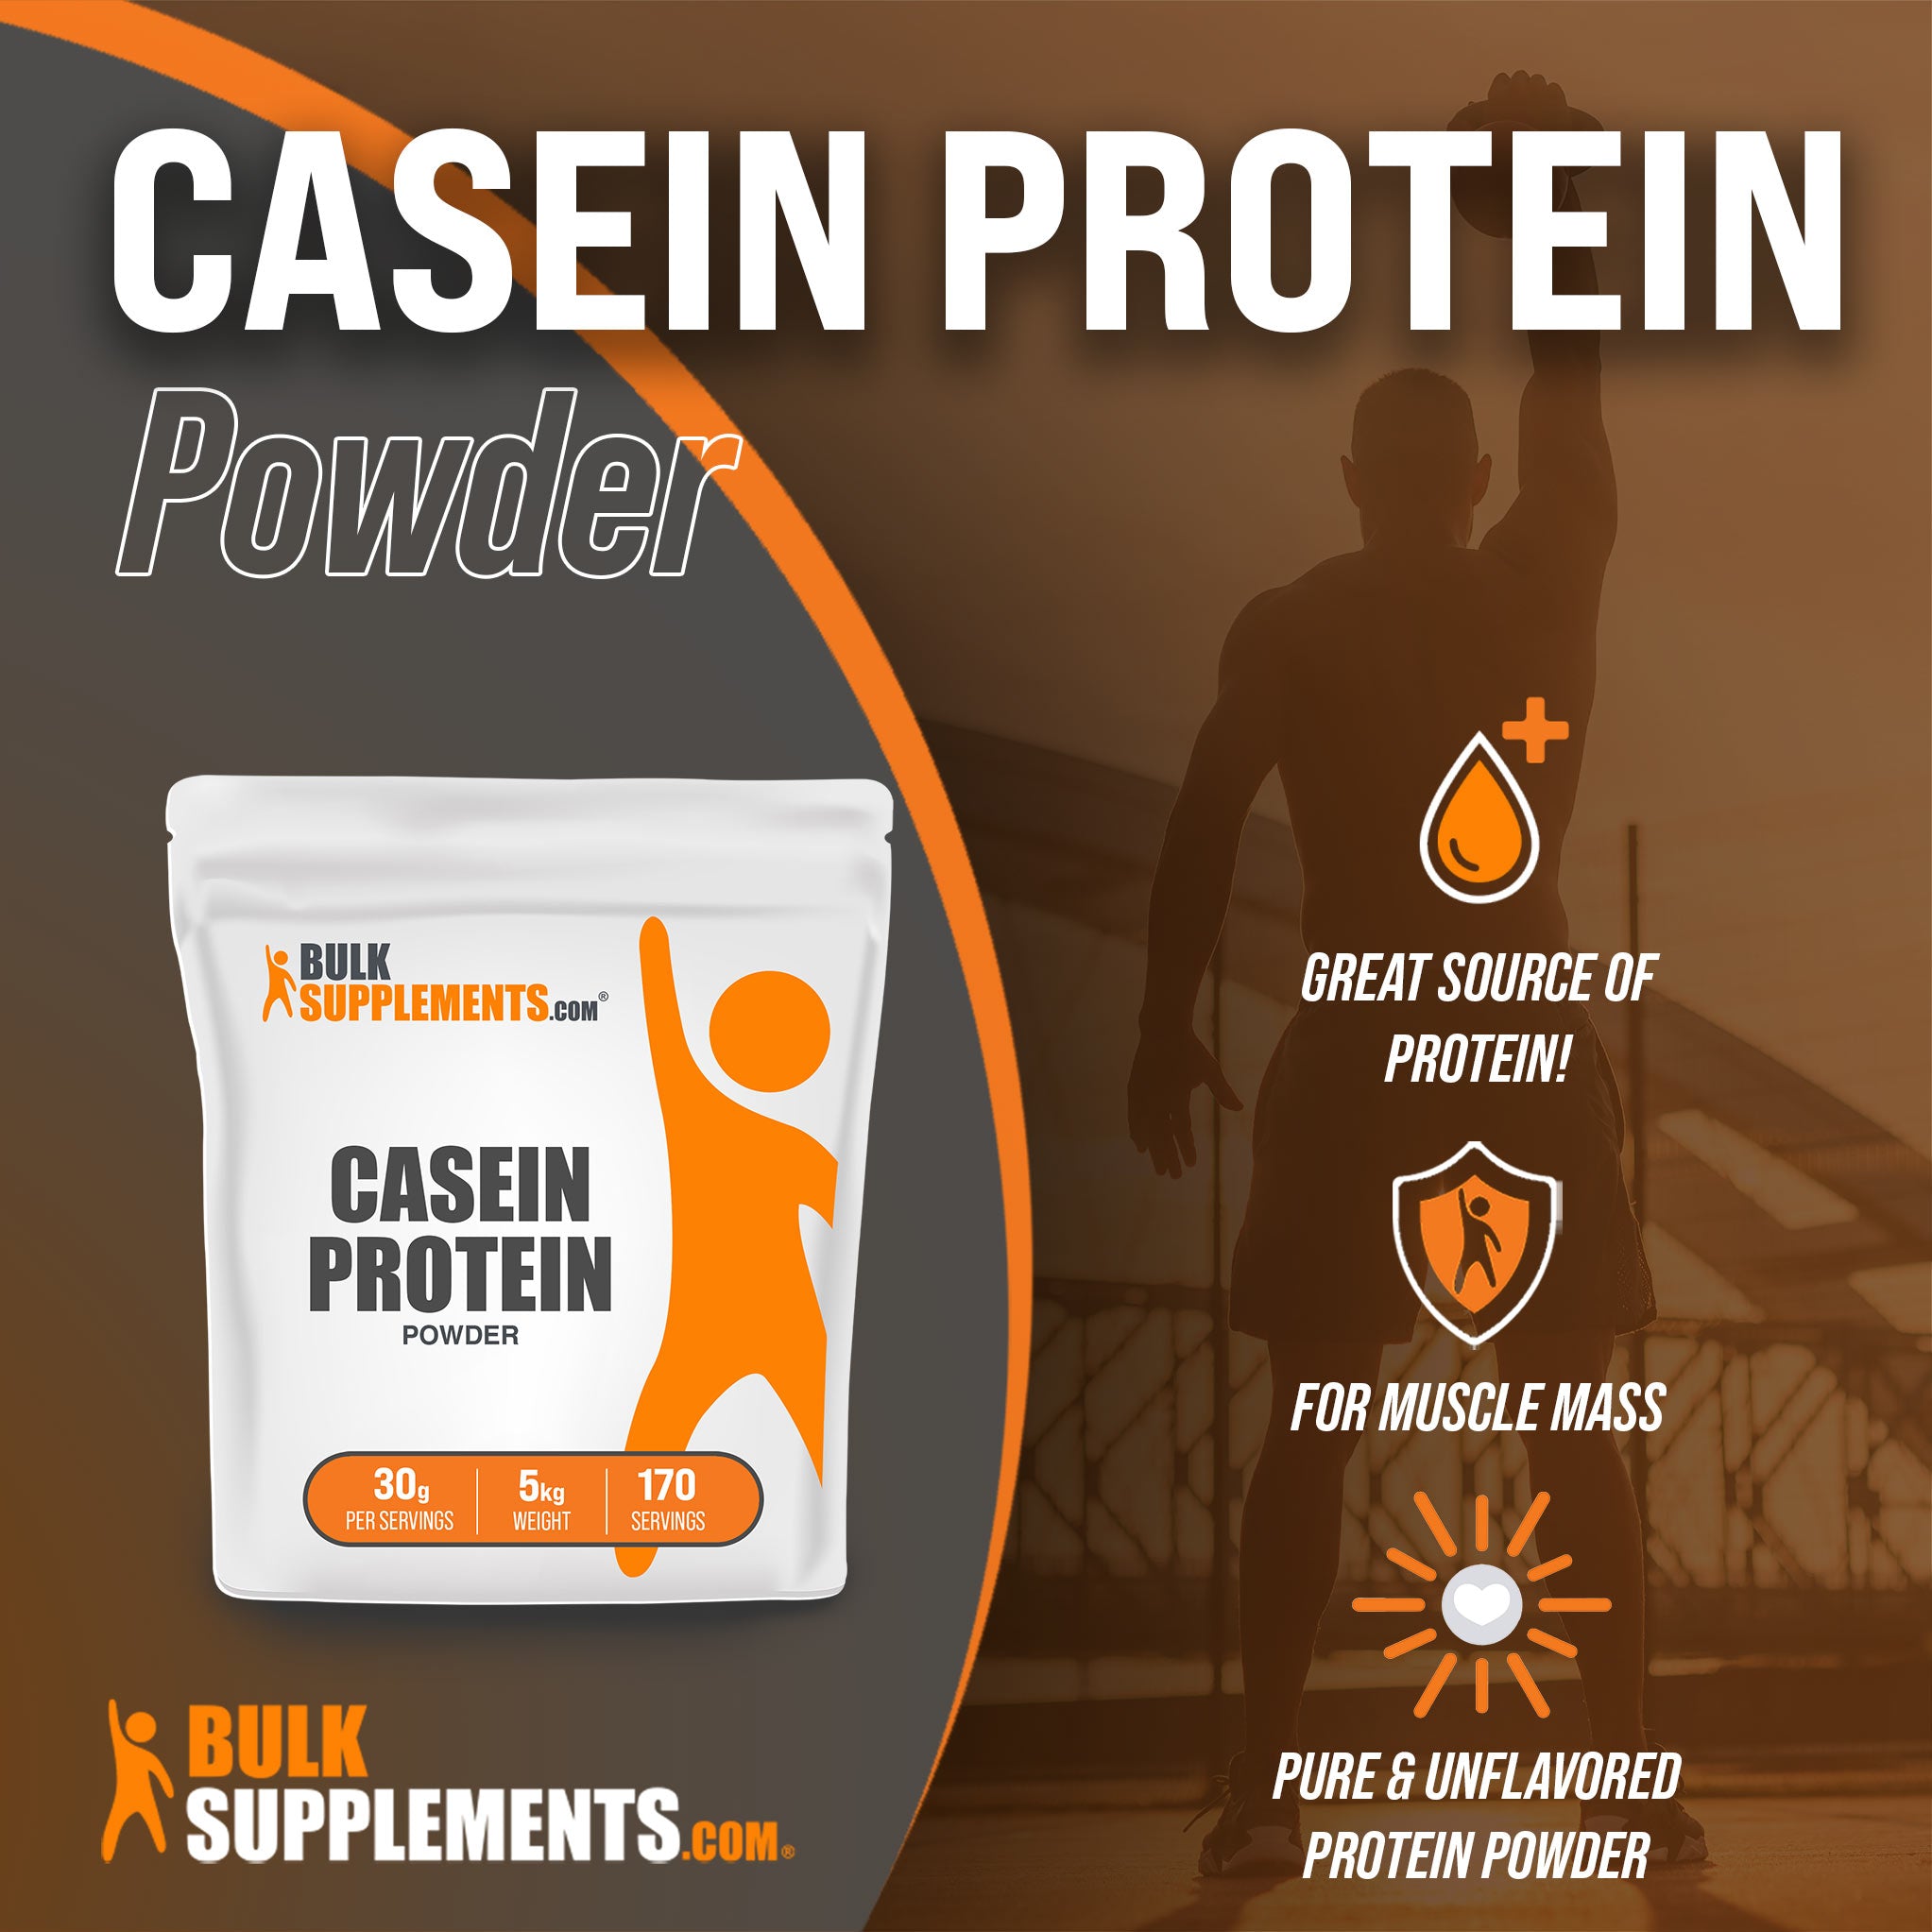 5kg casein protein powder is a great source of protein